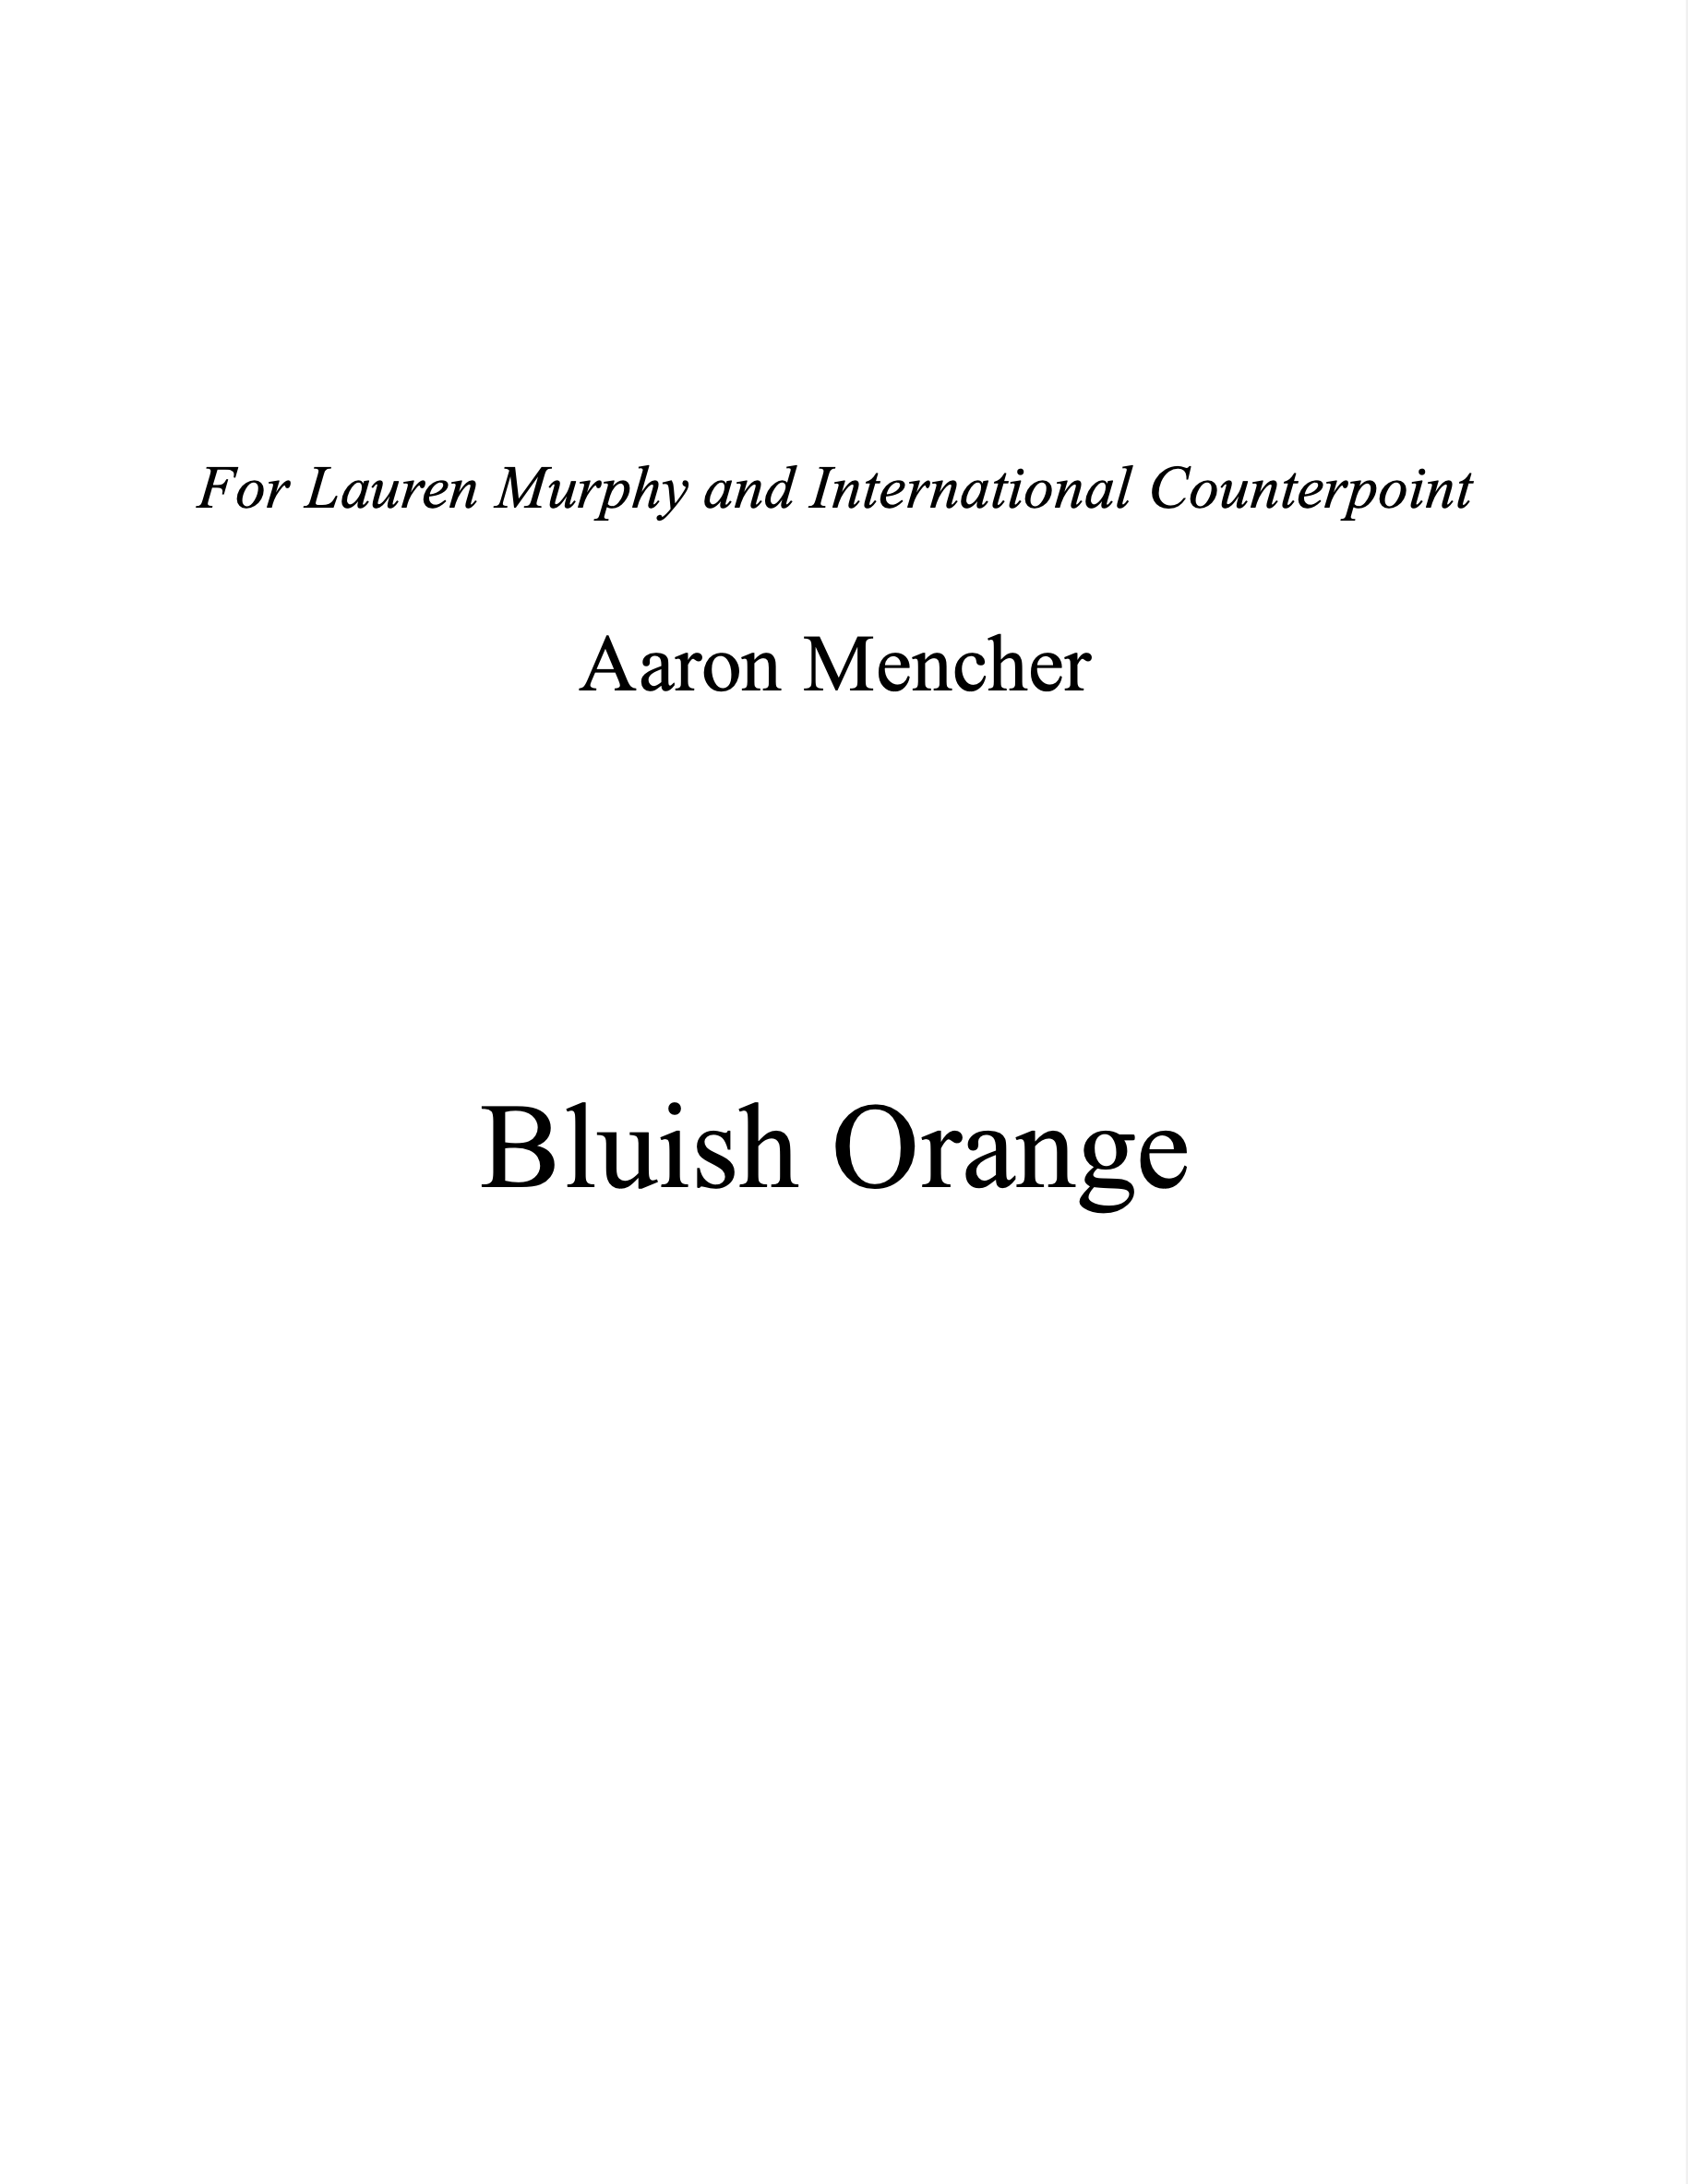 Bluish Orange by Aaron Mencher